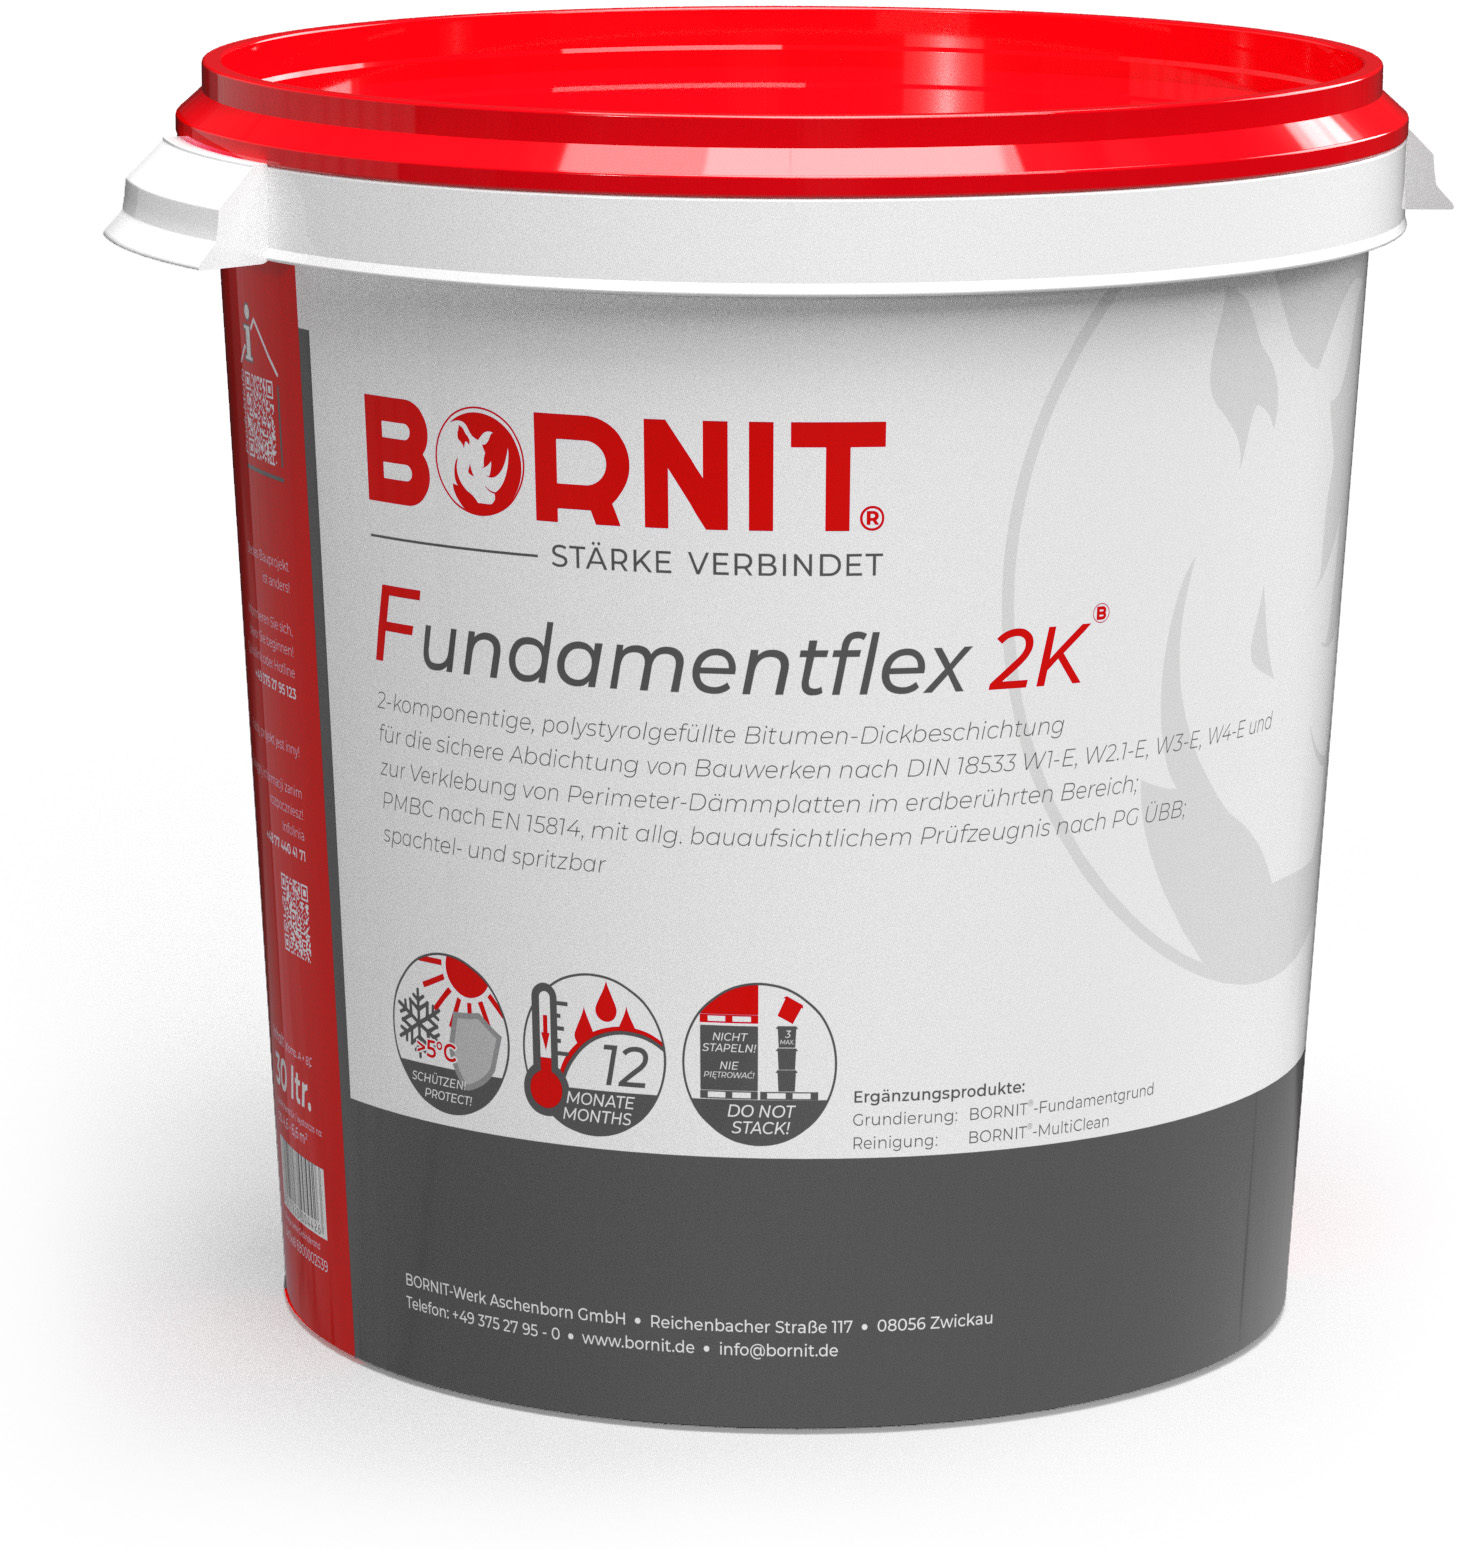 2-Komponenten Bornit-Fundamentflex 2-K flex PVC Eimer a 30 l